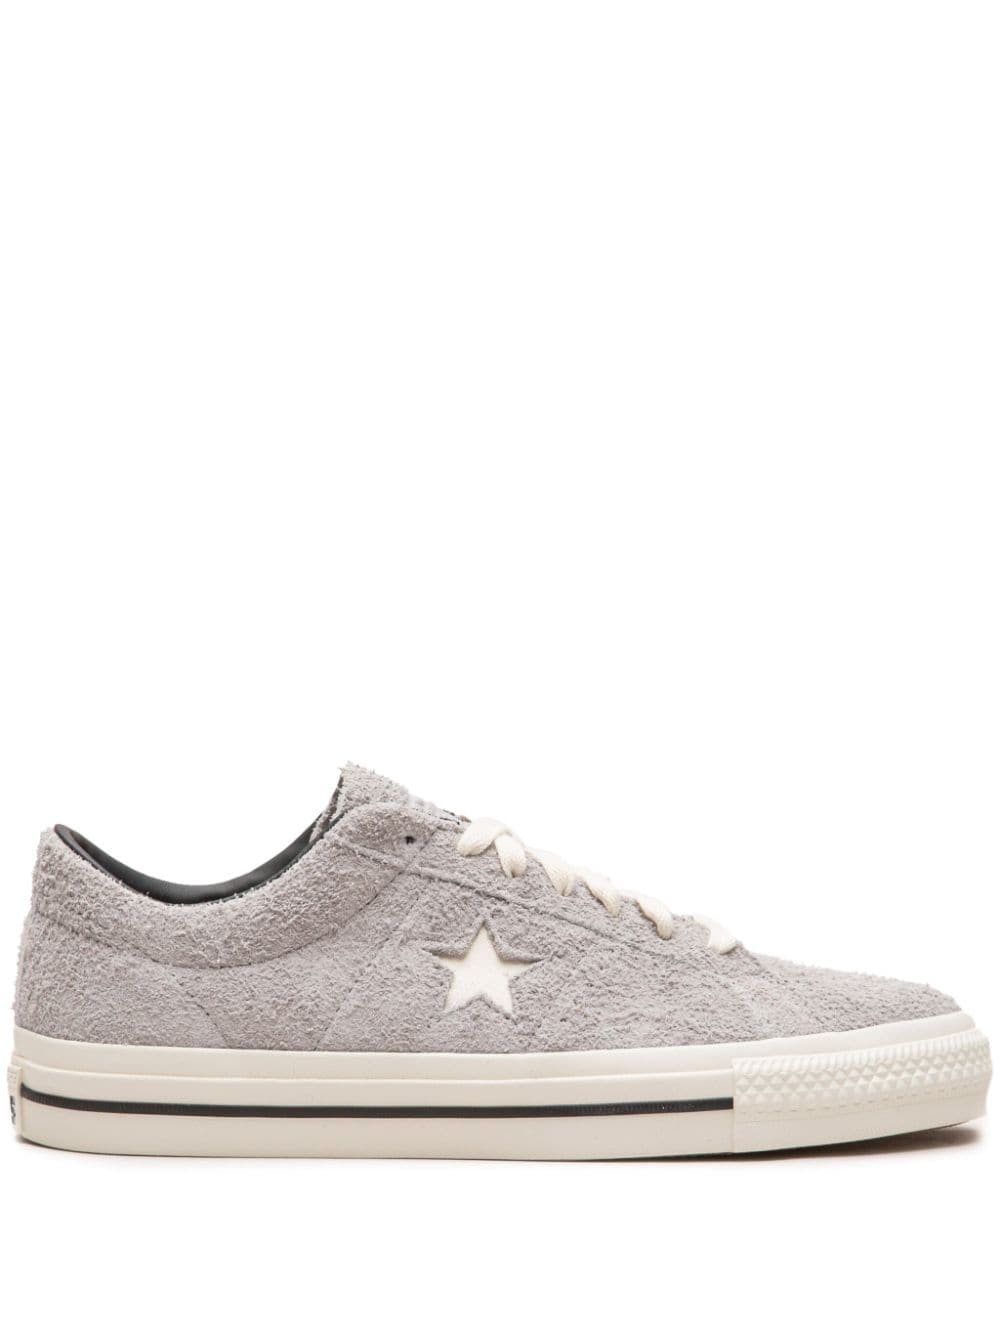 Converse One Star suede sneakers - Grey von Converse